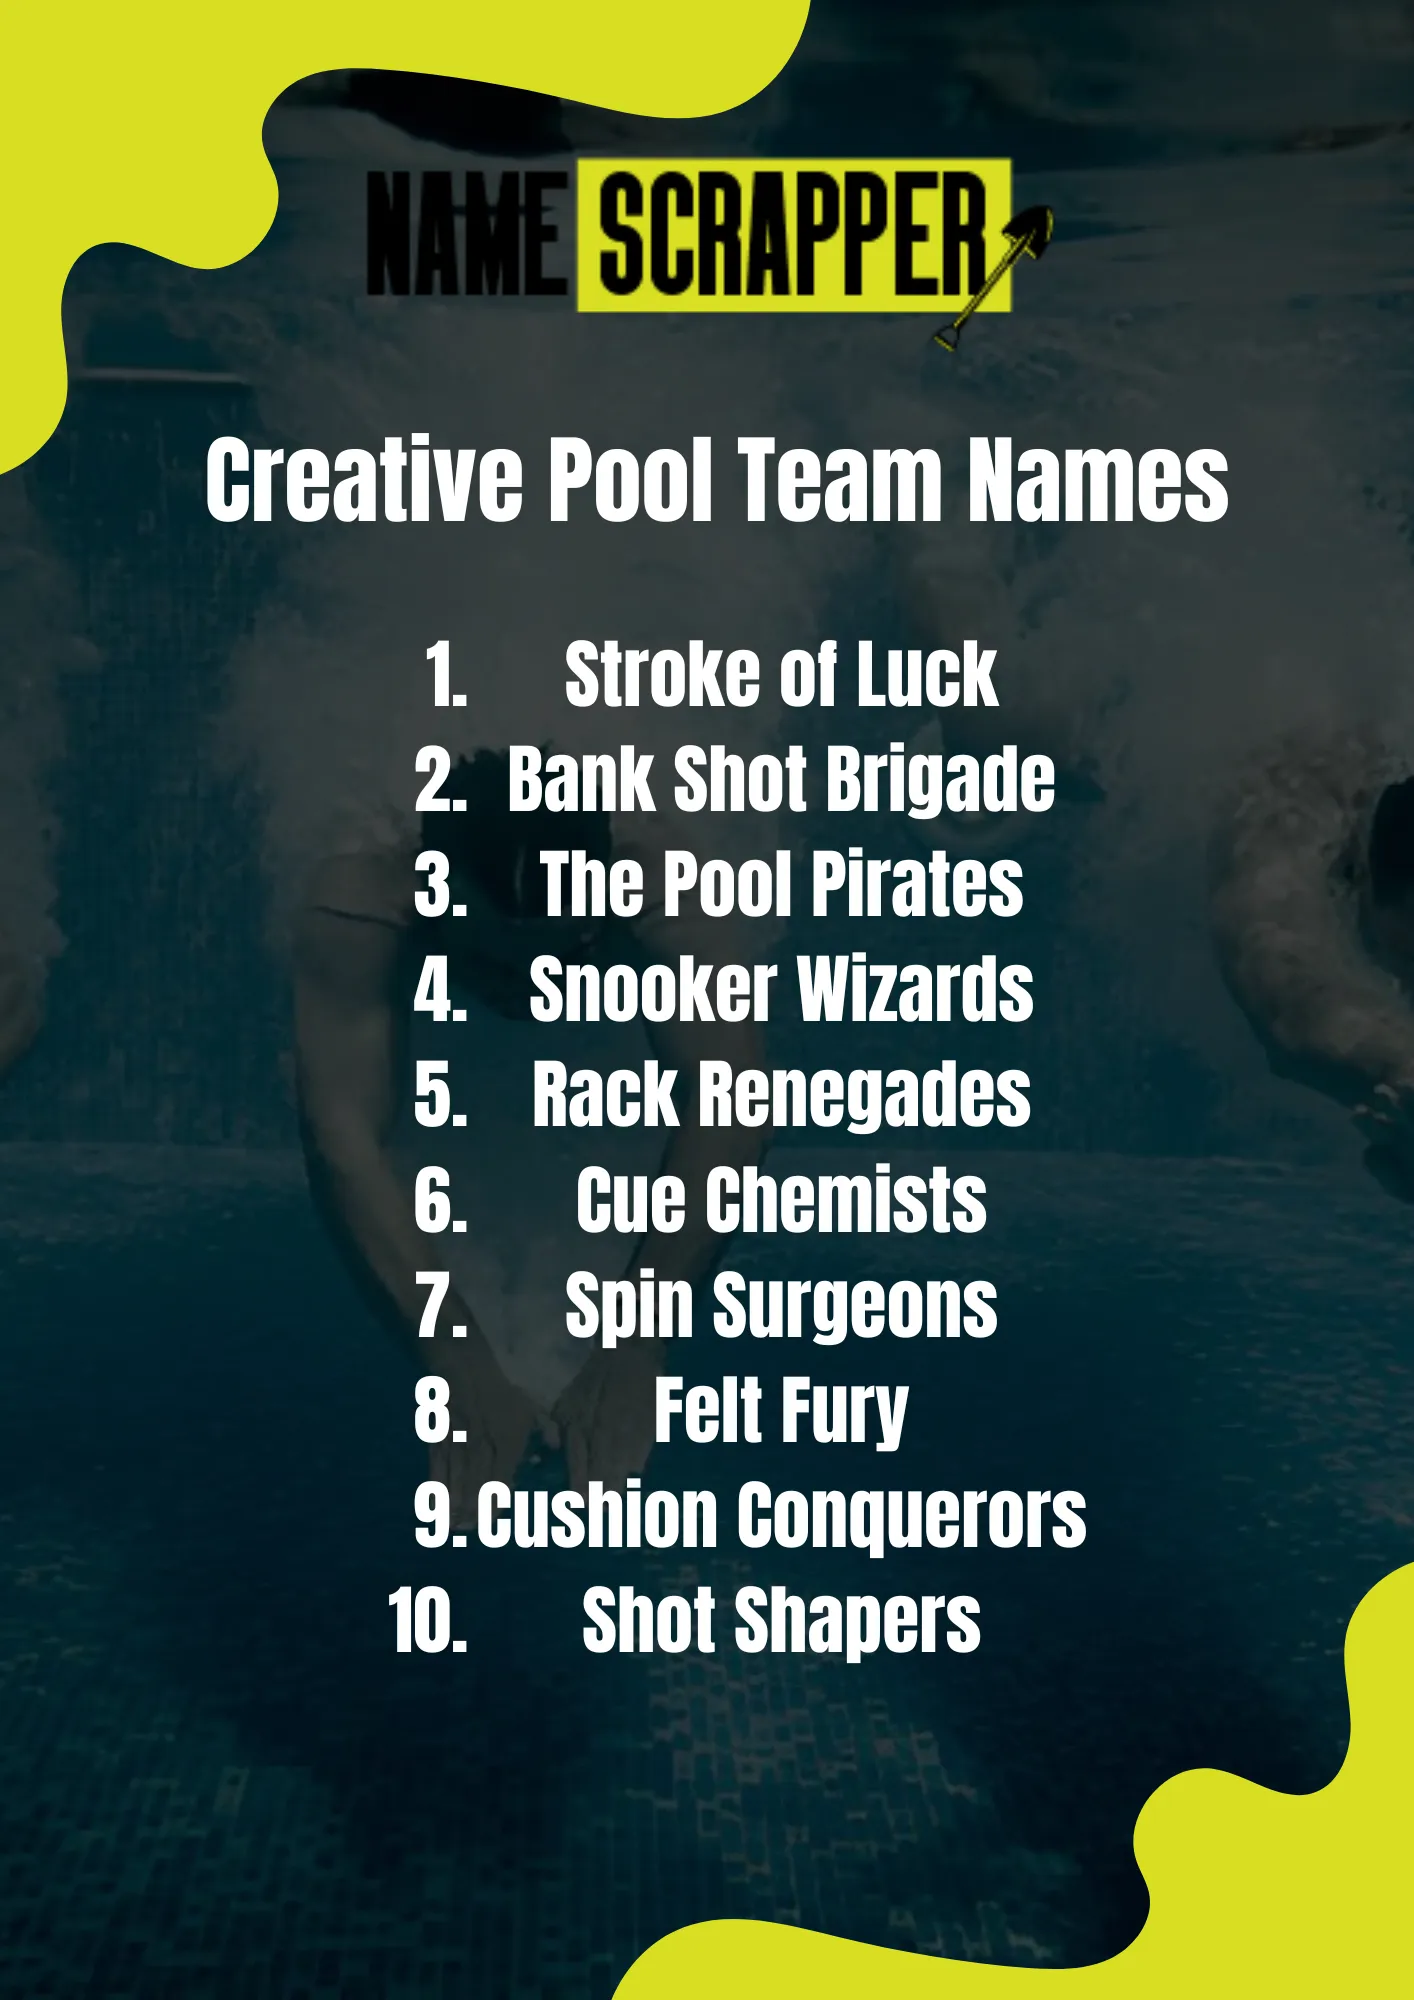 Creative Pool team names